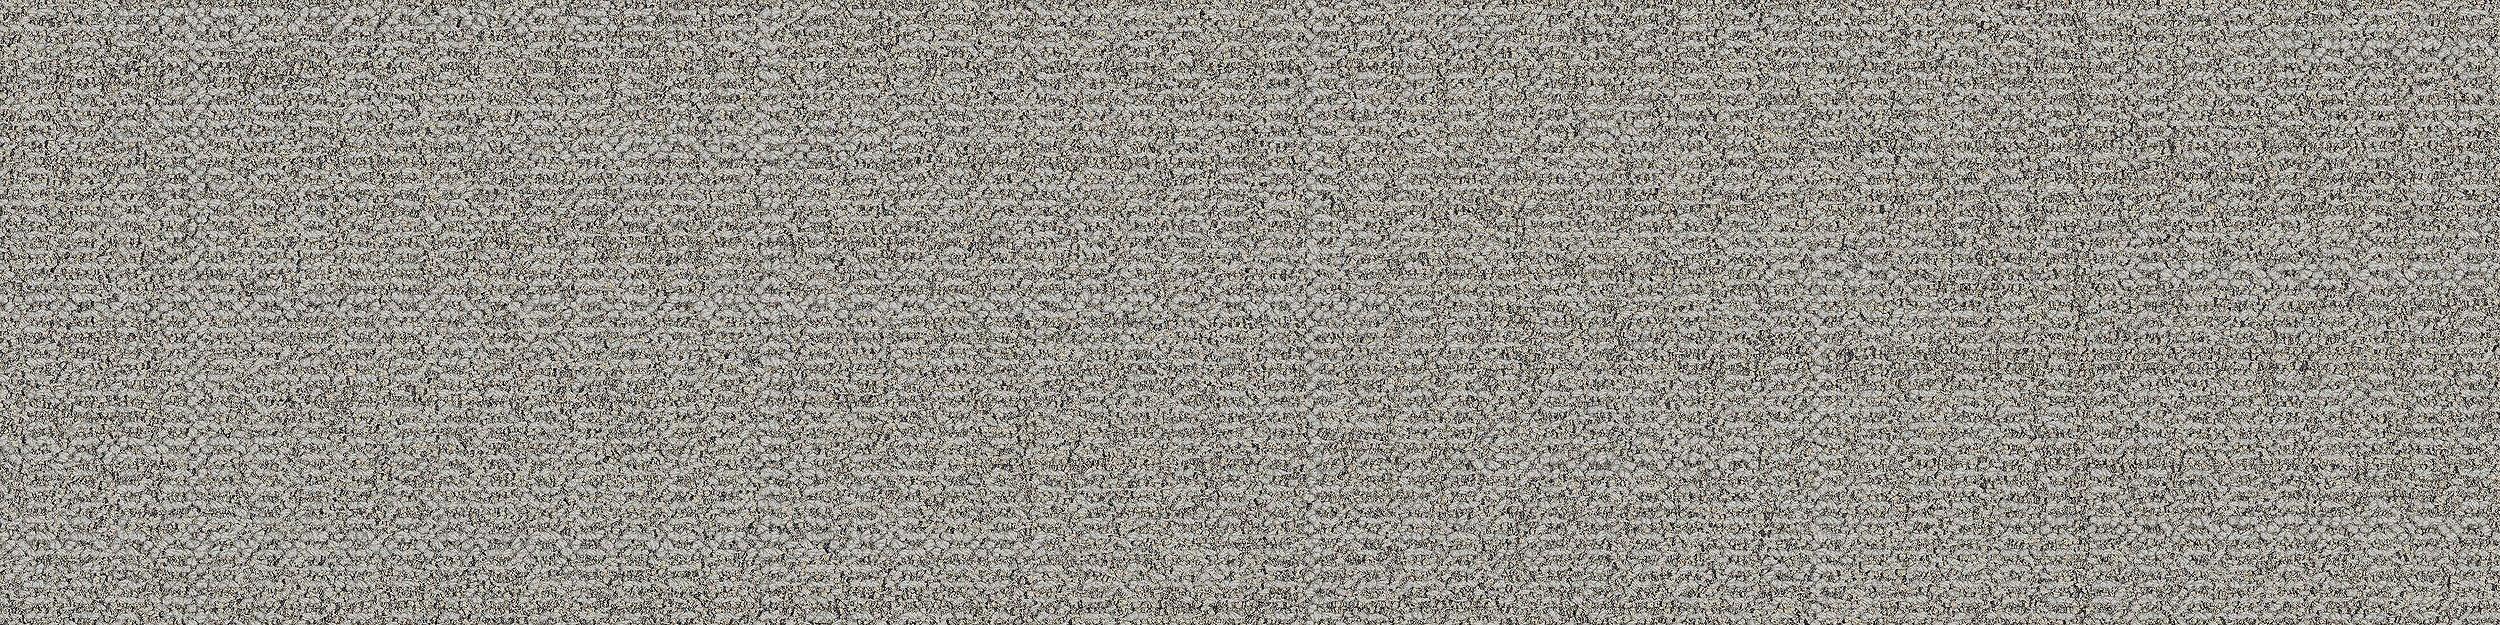 Open Air 401 Carpet Tile In Linen image number 6